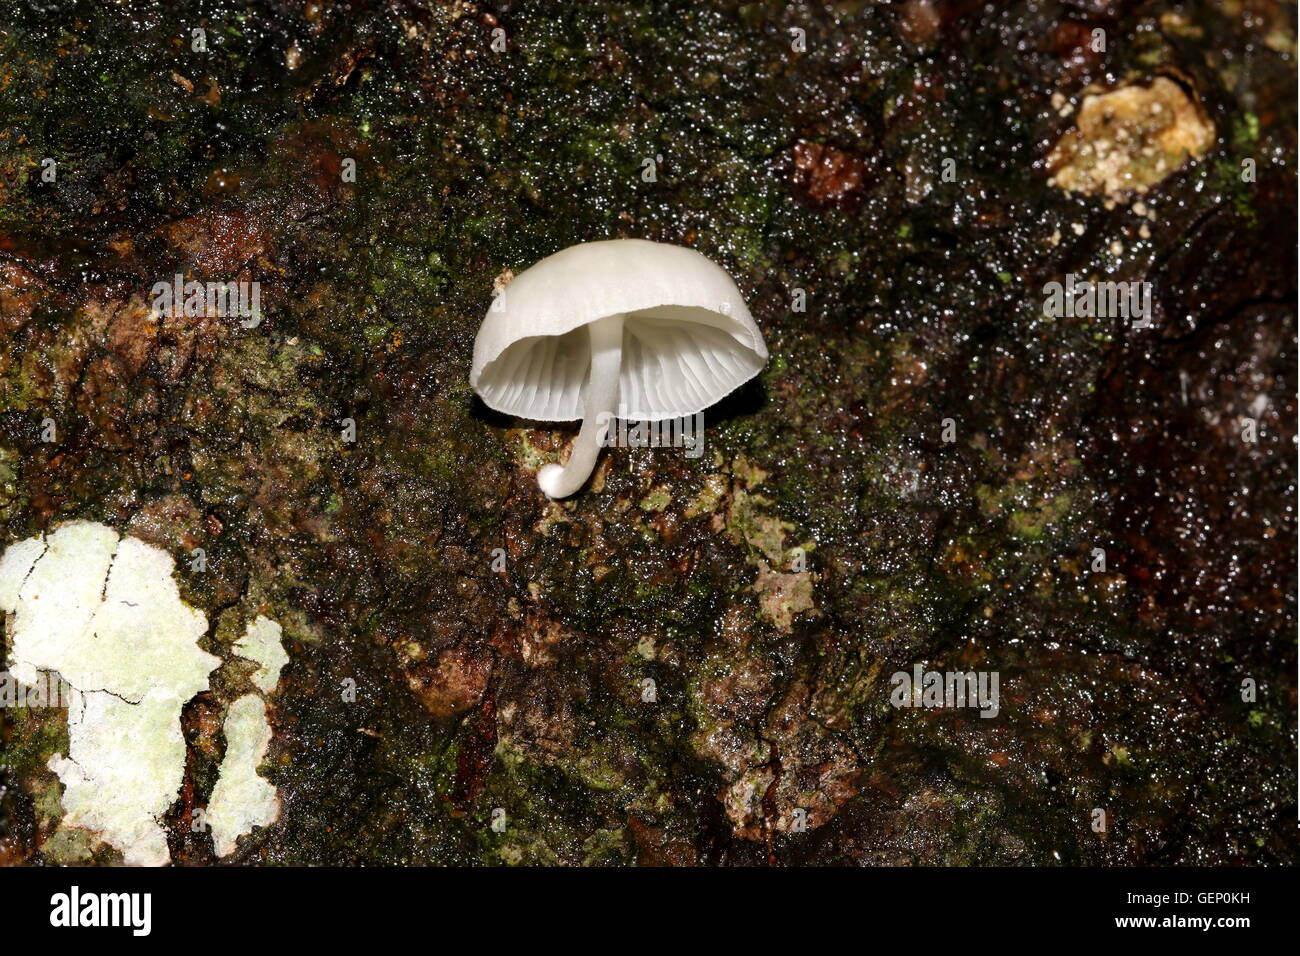 Luminous white mushroom growing on a tree trunk. Stock Photo